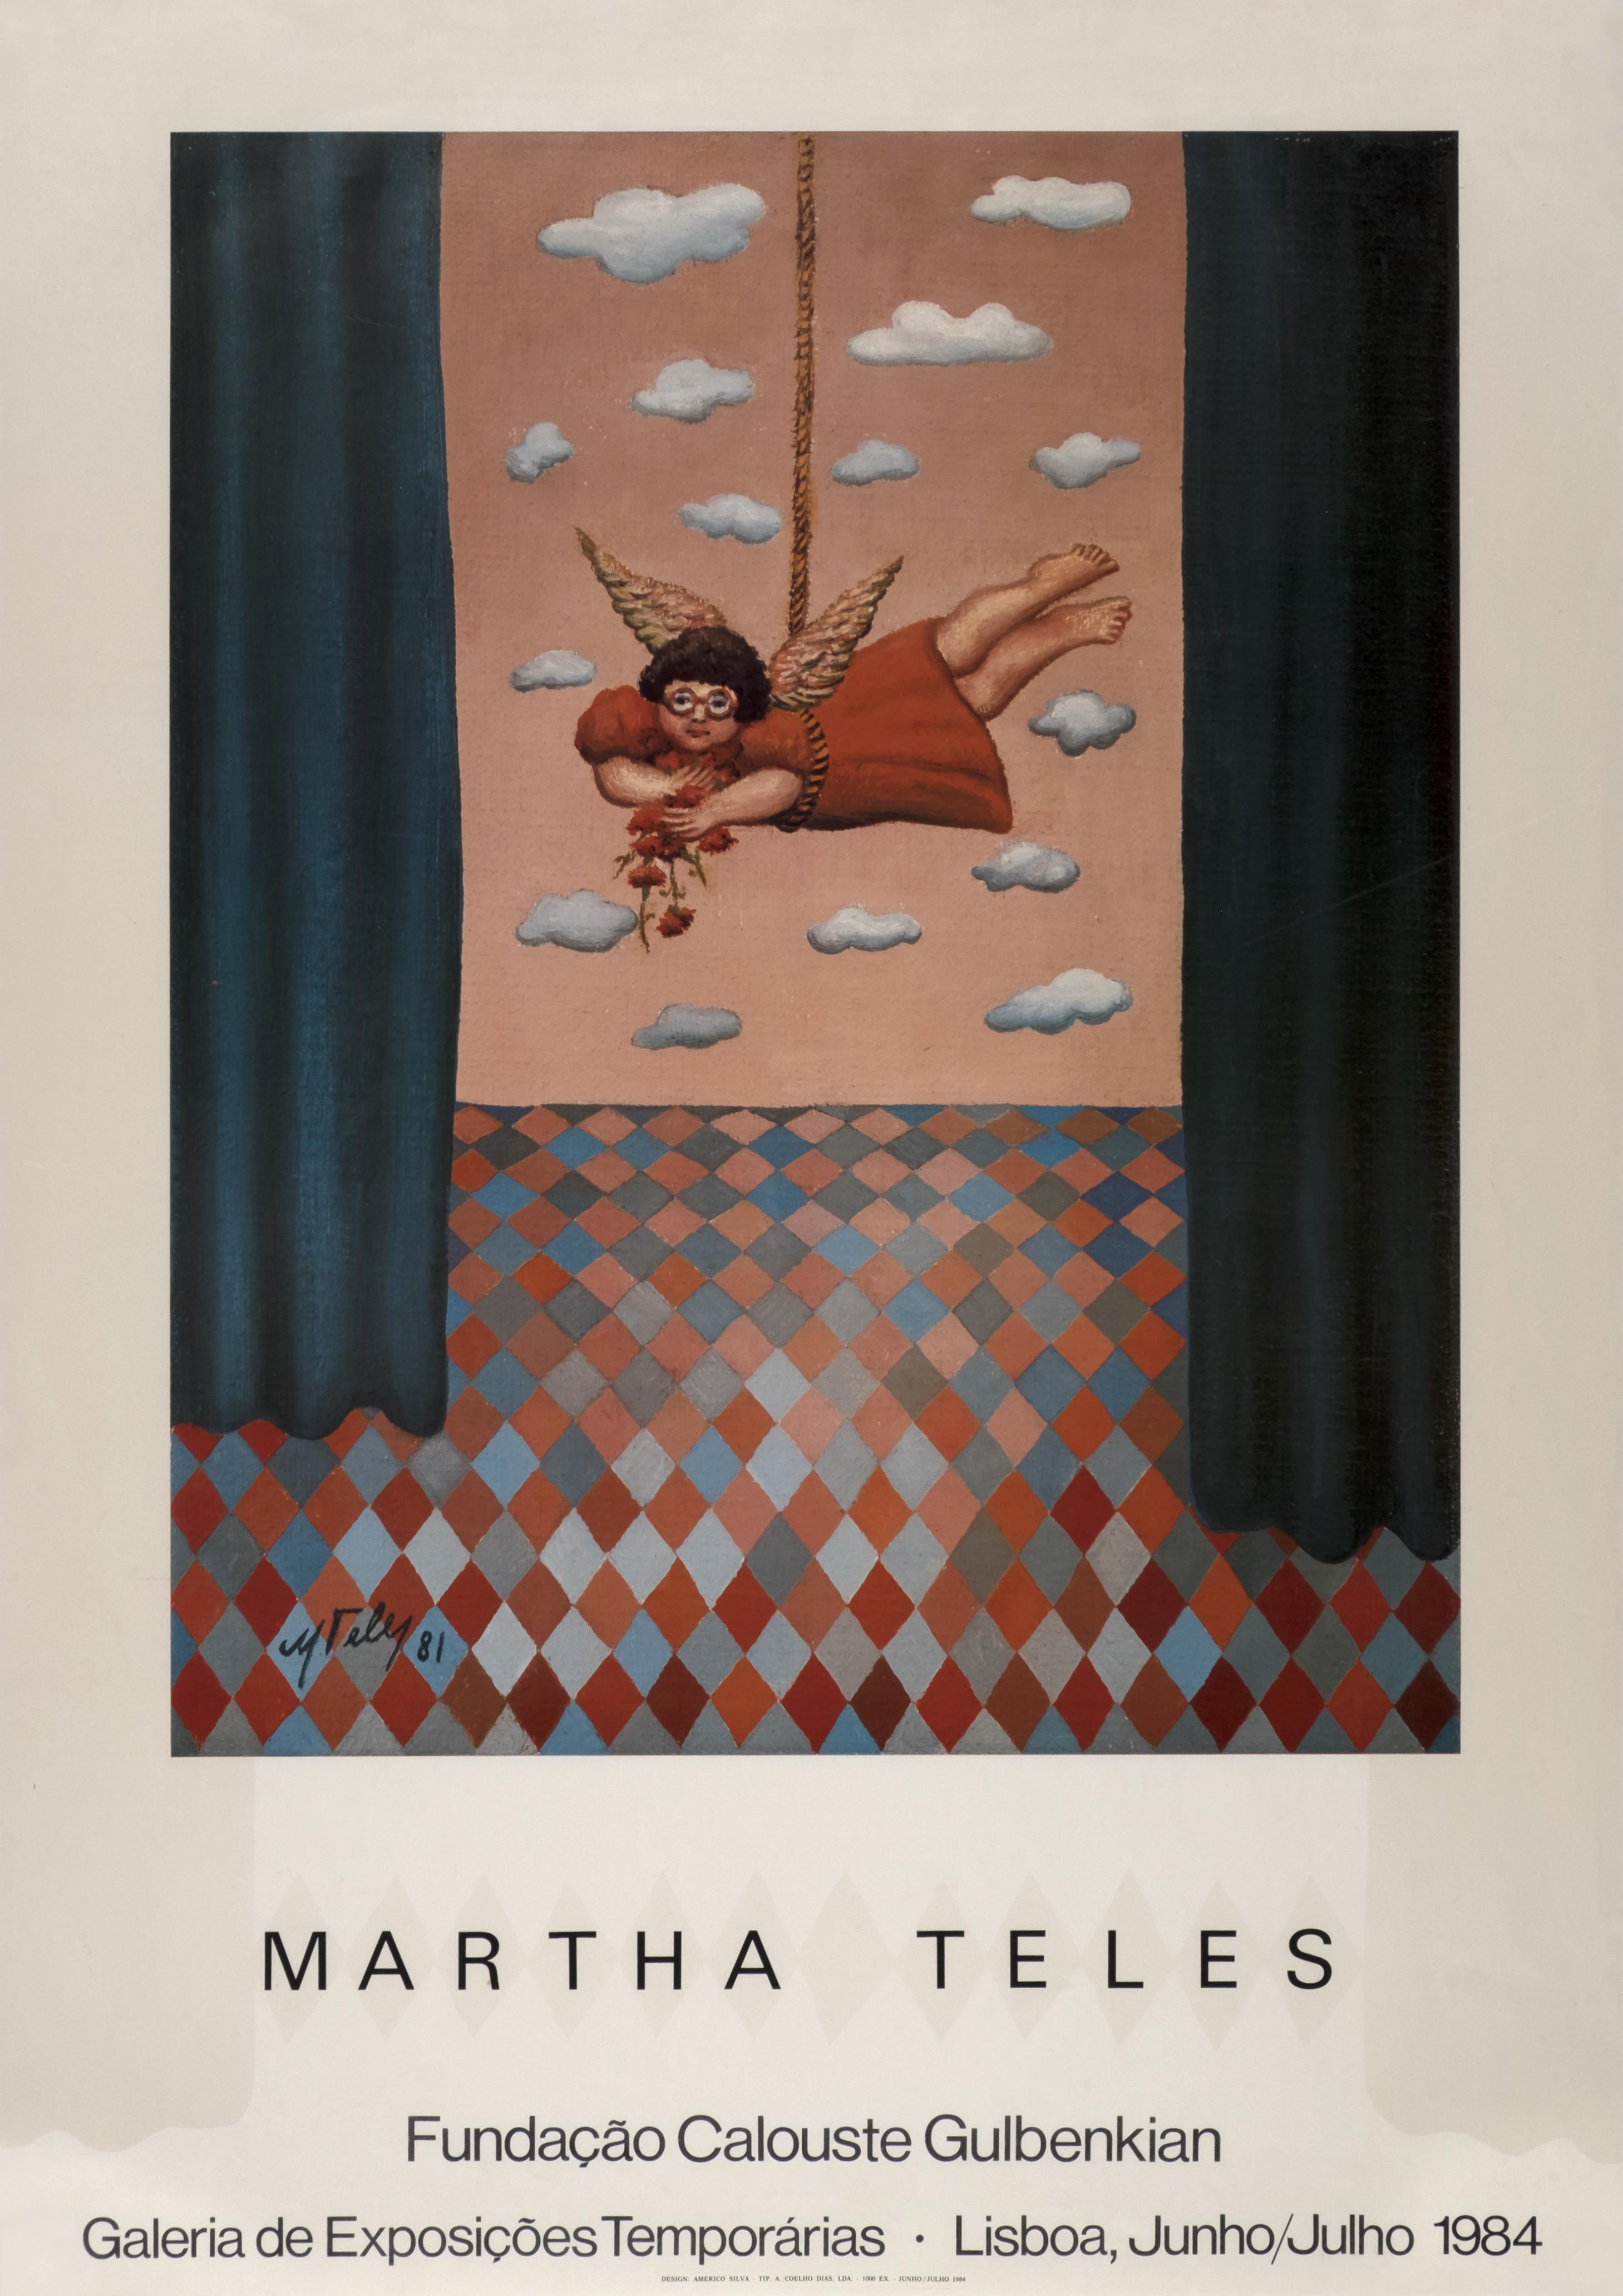 Martha Teles